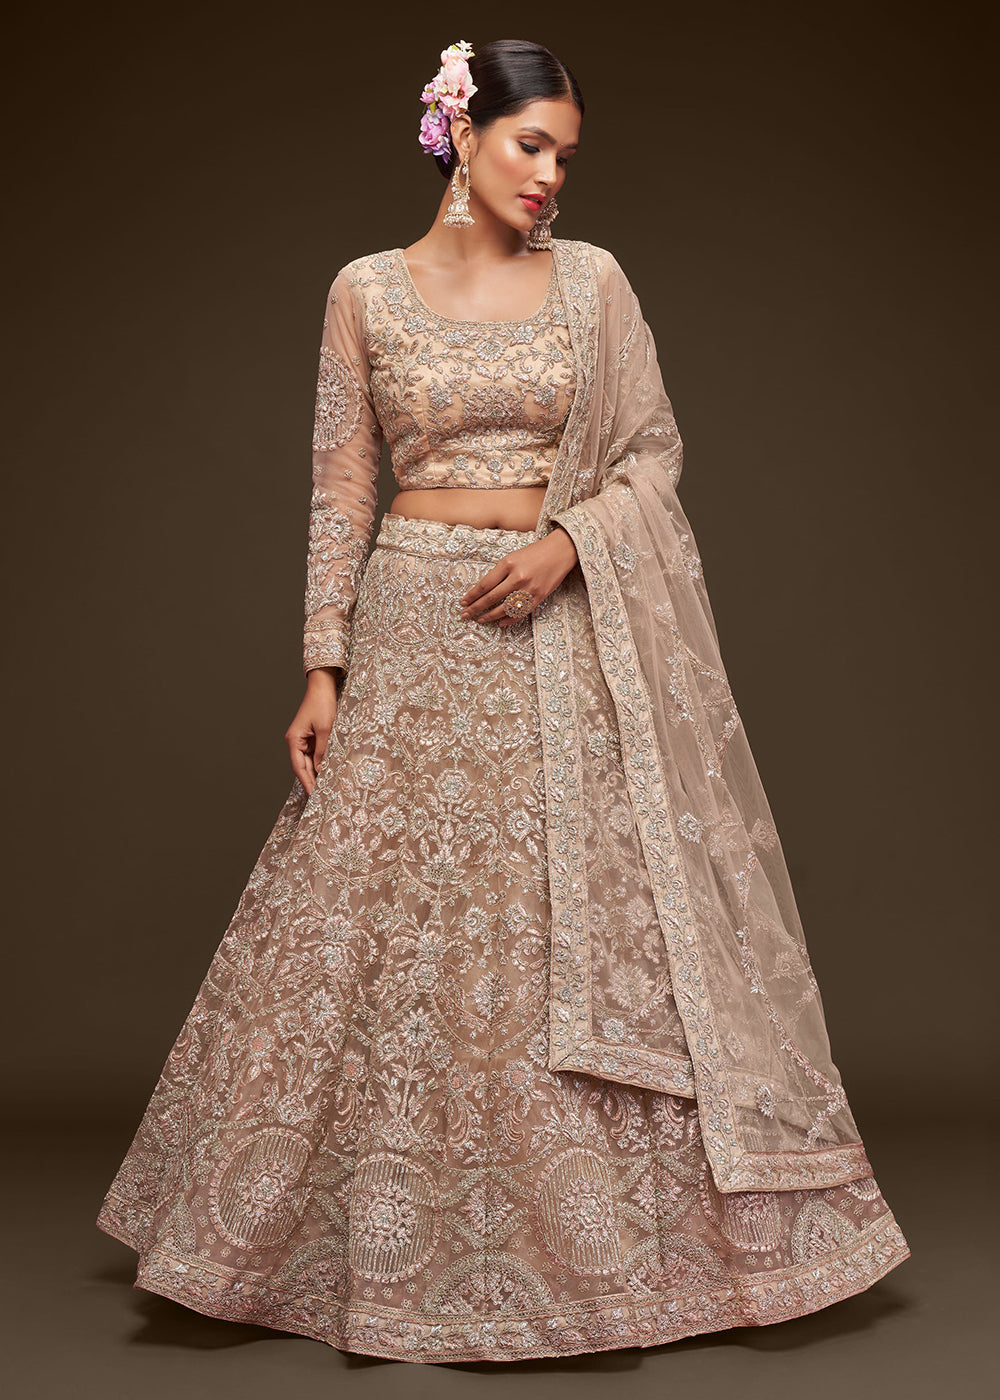 Buy Now Royal Beige Embroidered Soft Net Wedding Lehenga Choli Online in USA, UK, Canada & Worldwide at Empress Clothing. 